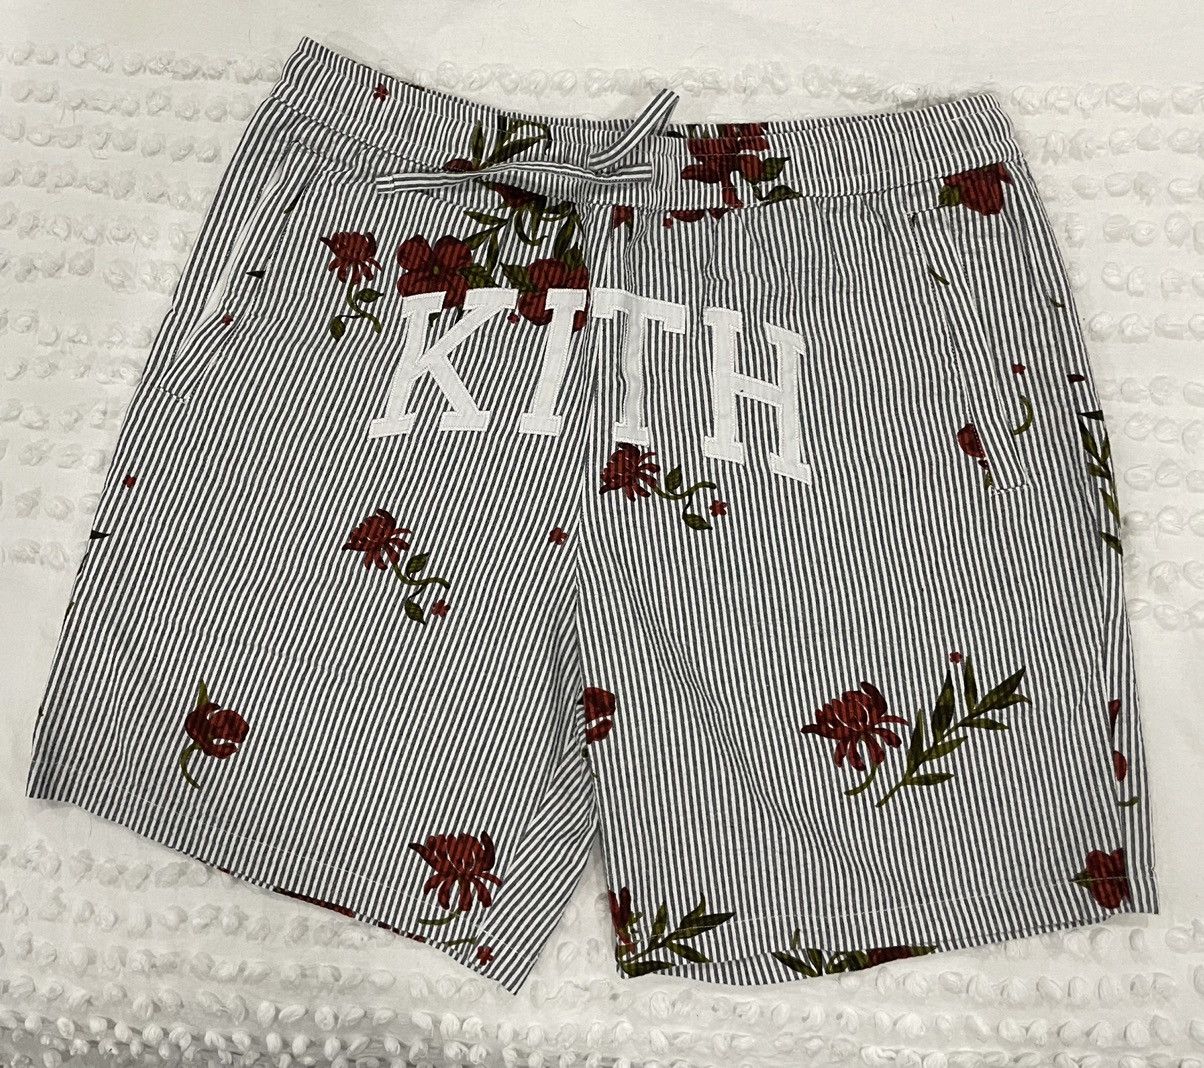 Kith KITH FLORAL SEERSUCKER HARDAWAY SHORTS Size XL | Grailed